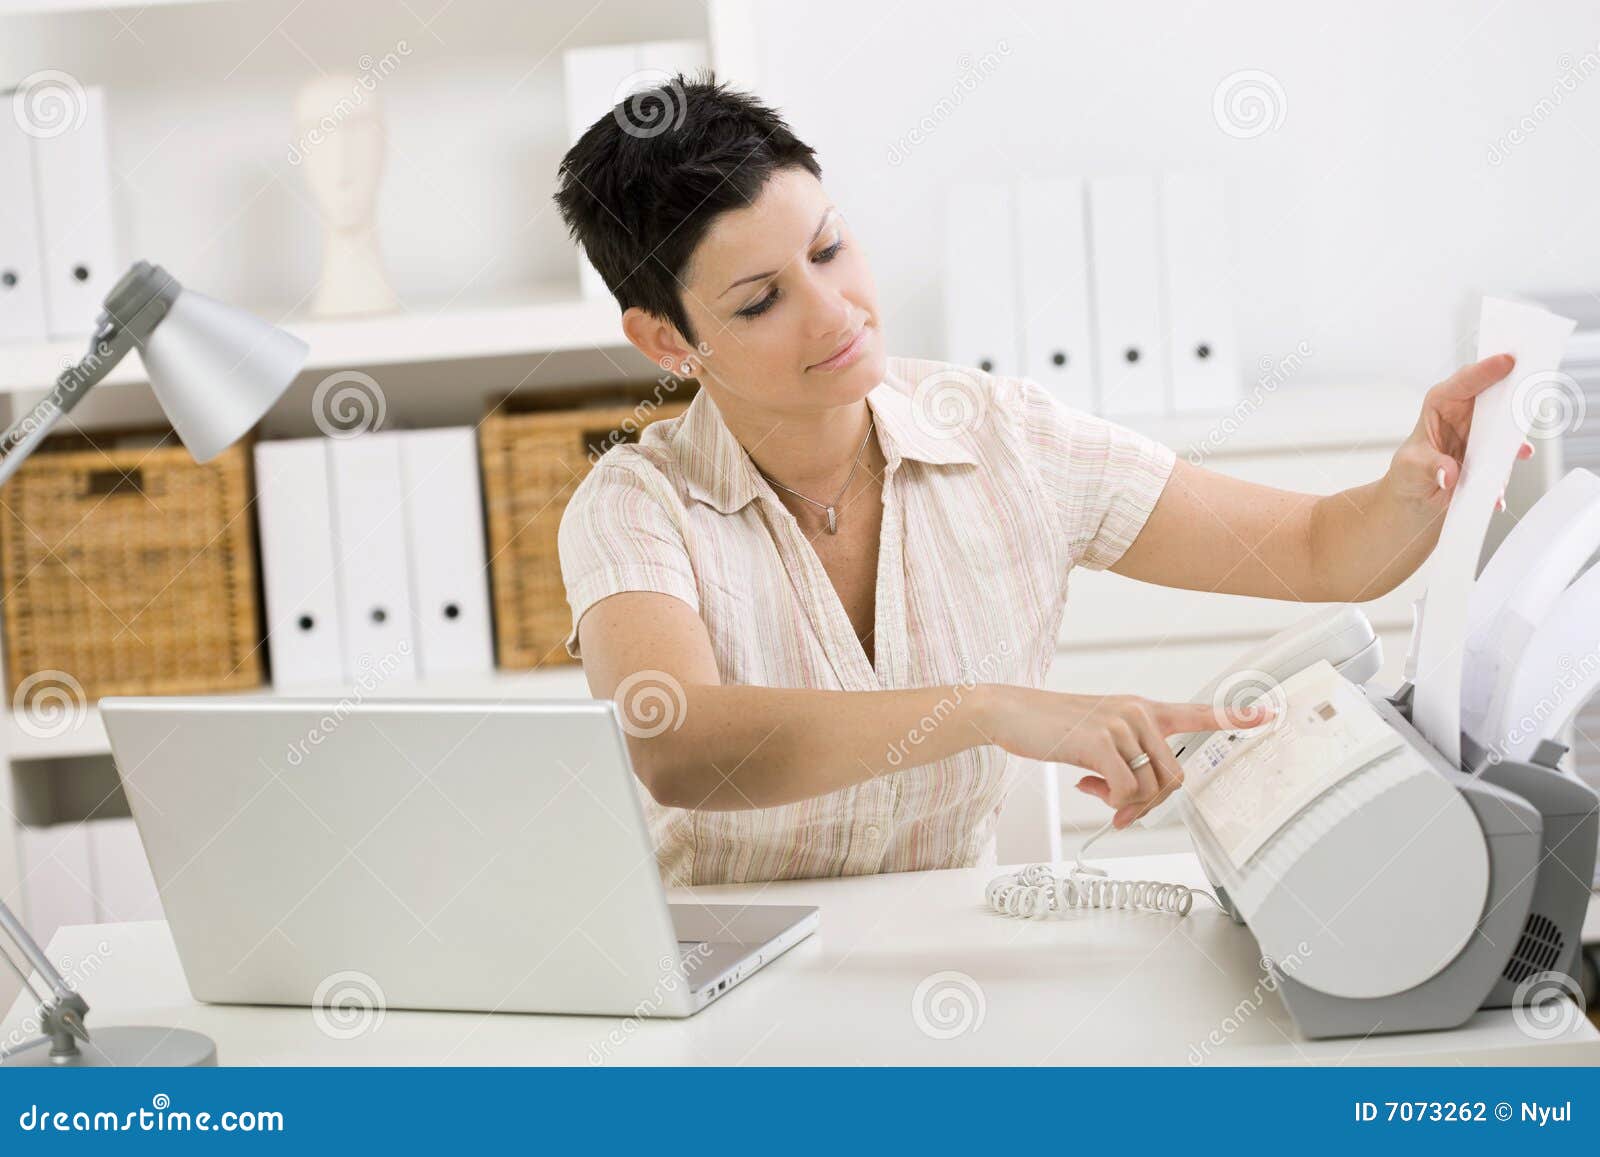 woman using fax machine